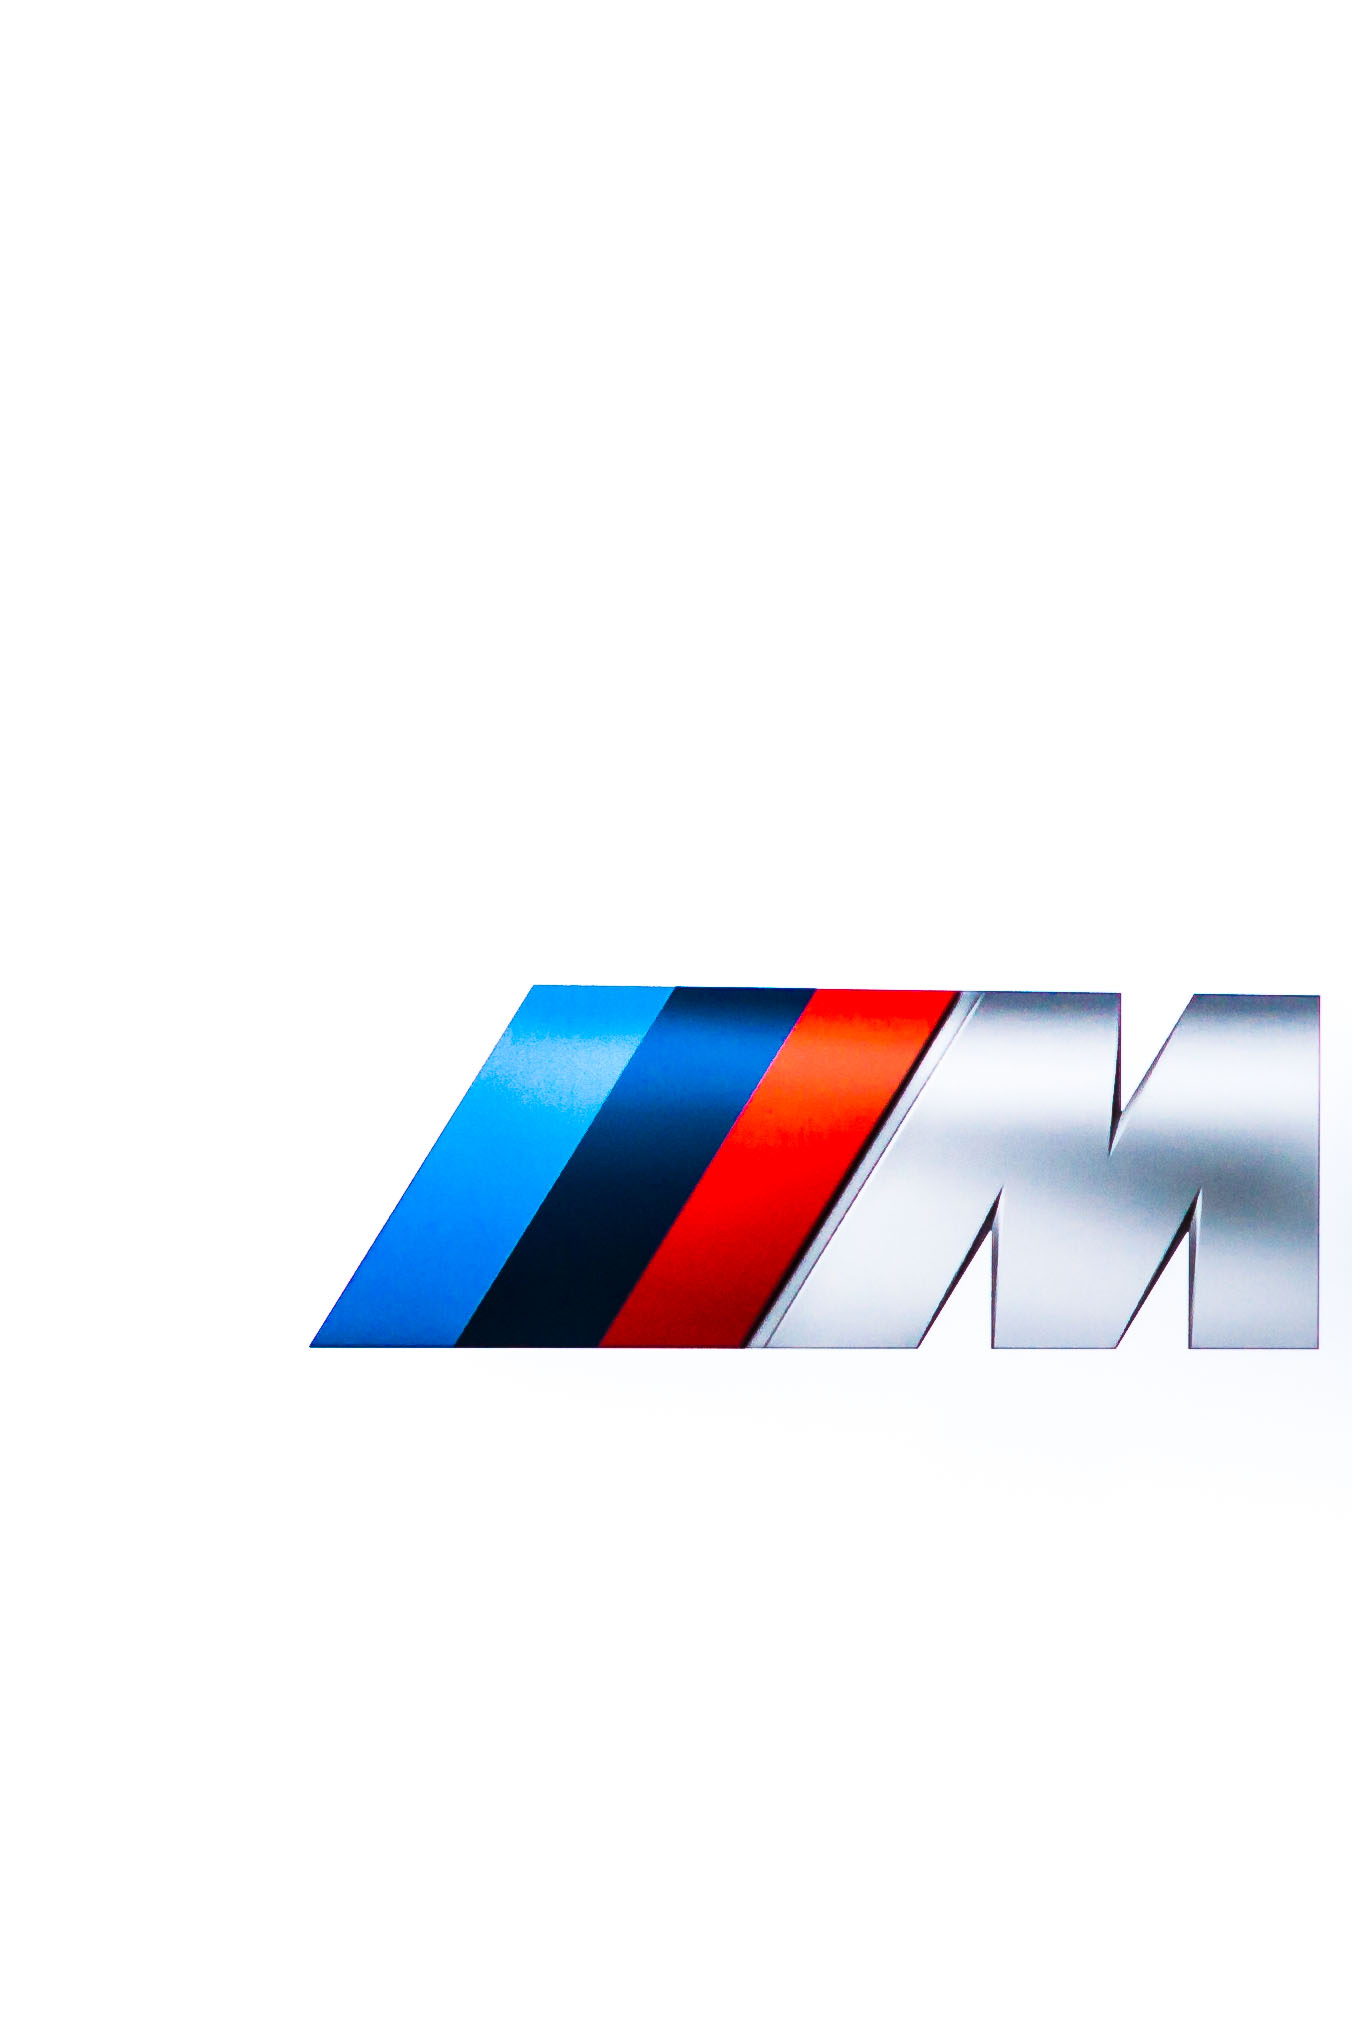 m wallpaper mobile,logo,flag,line,rectangle,graphics